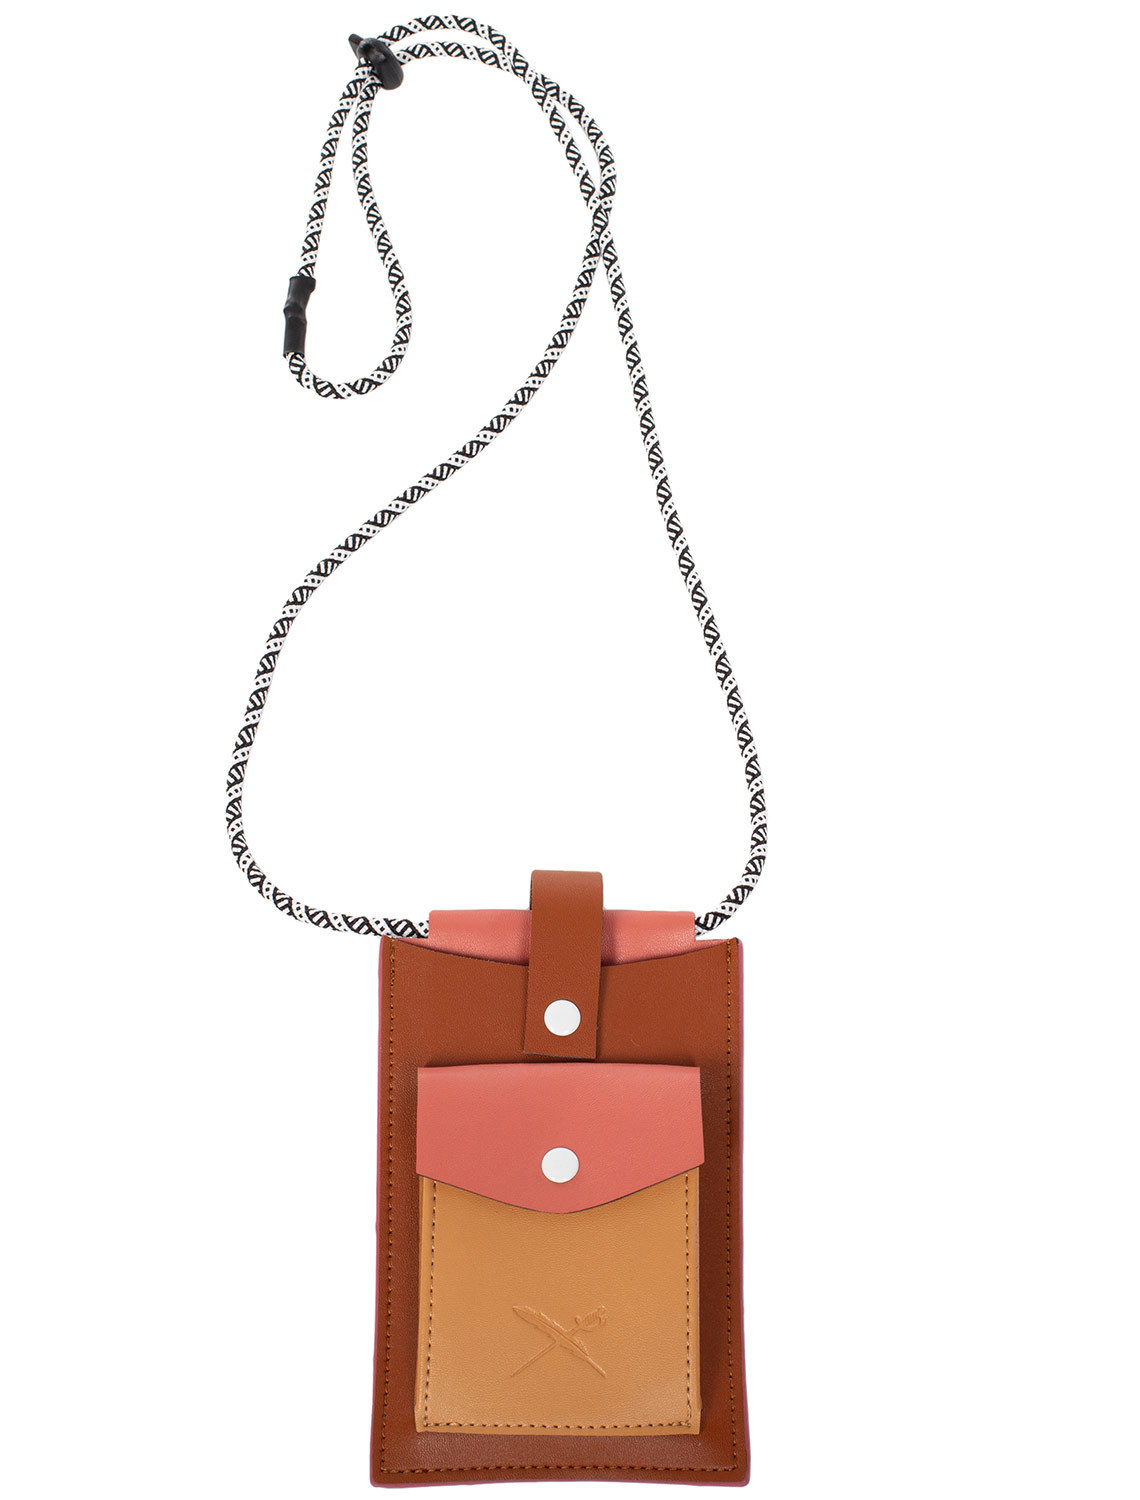 Veder Phone Wallet [red brown]